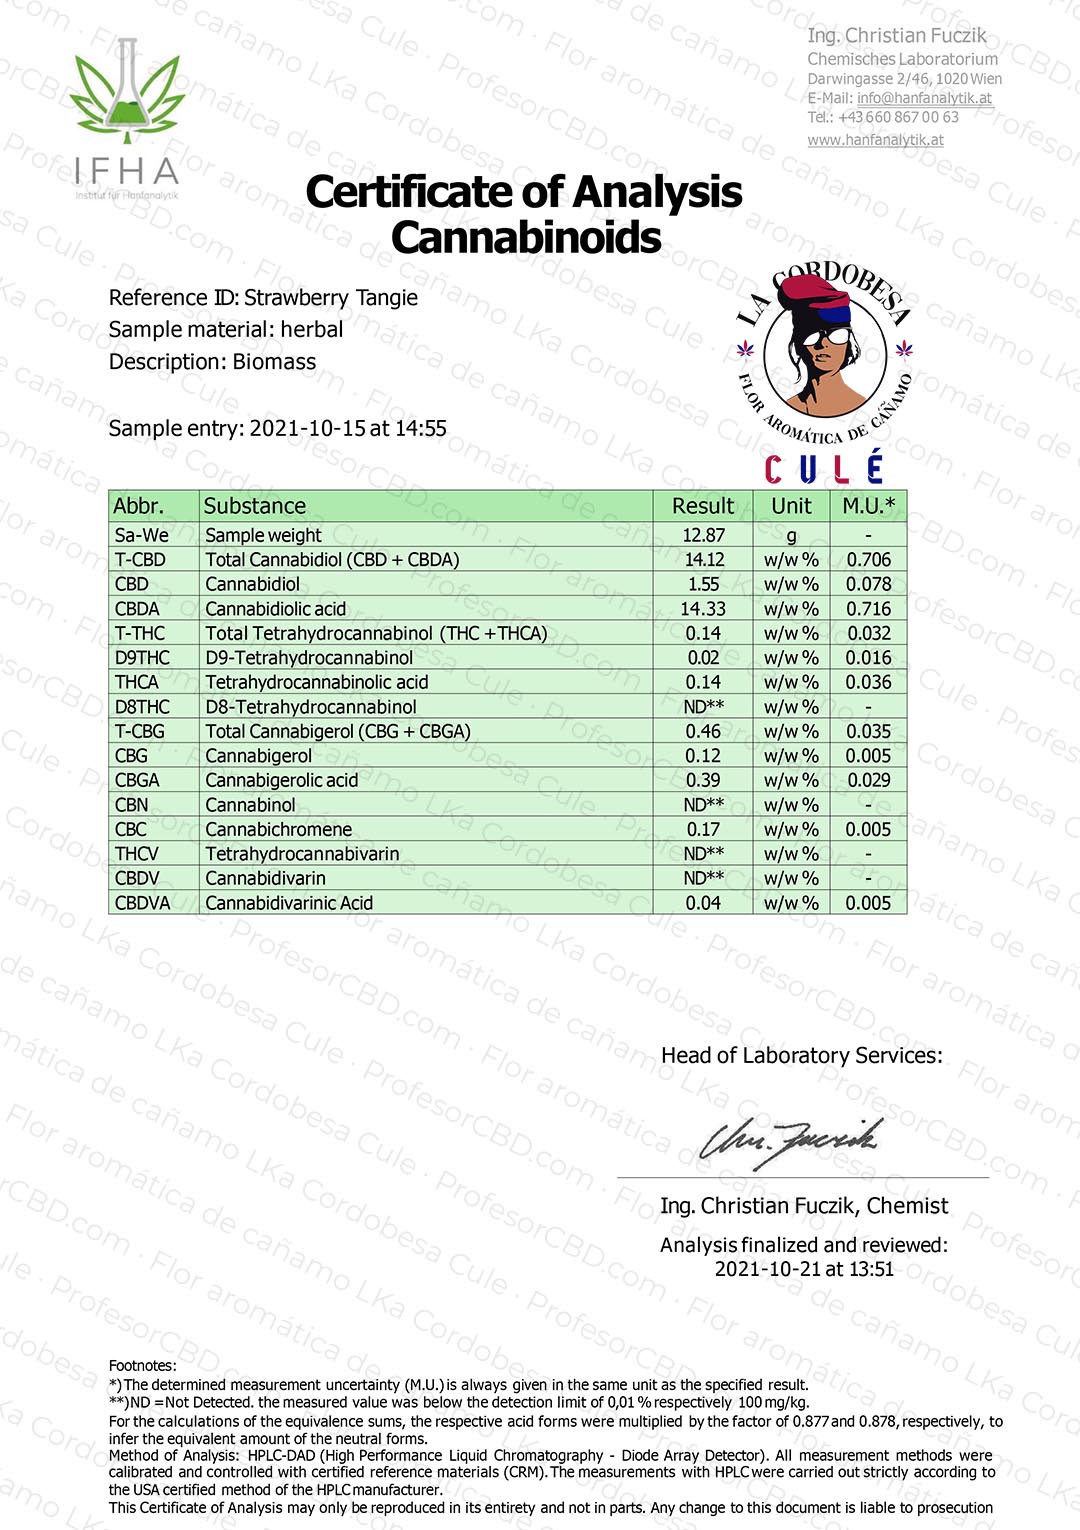 CBD Aromatic Flower Bud at 14.12% La Cordobesa Culé